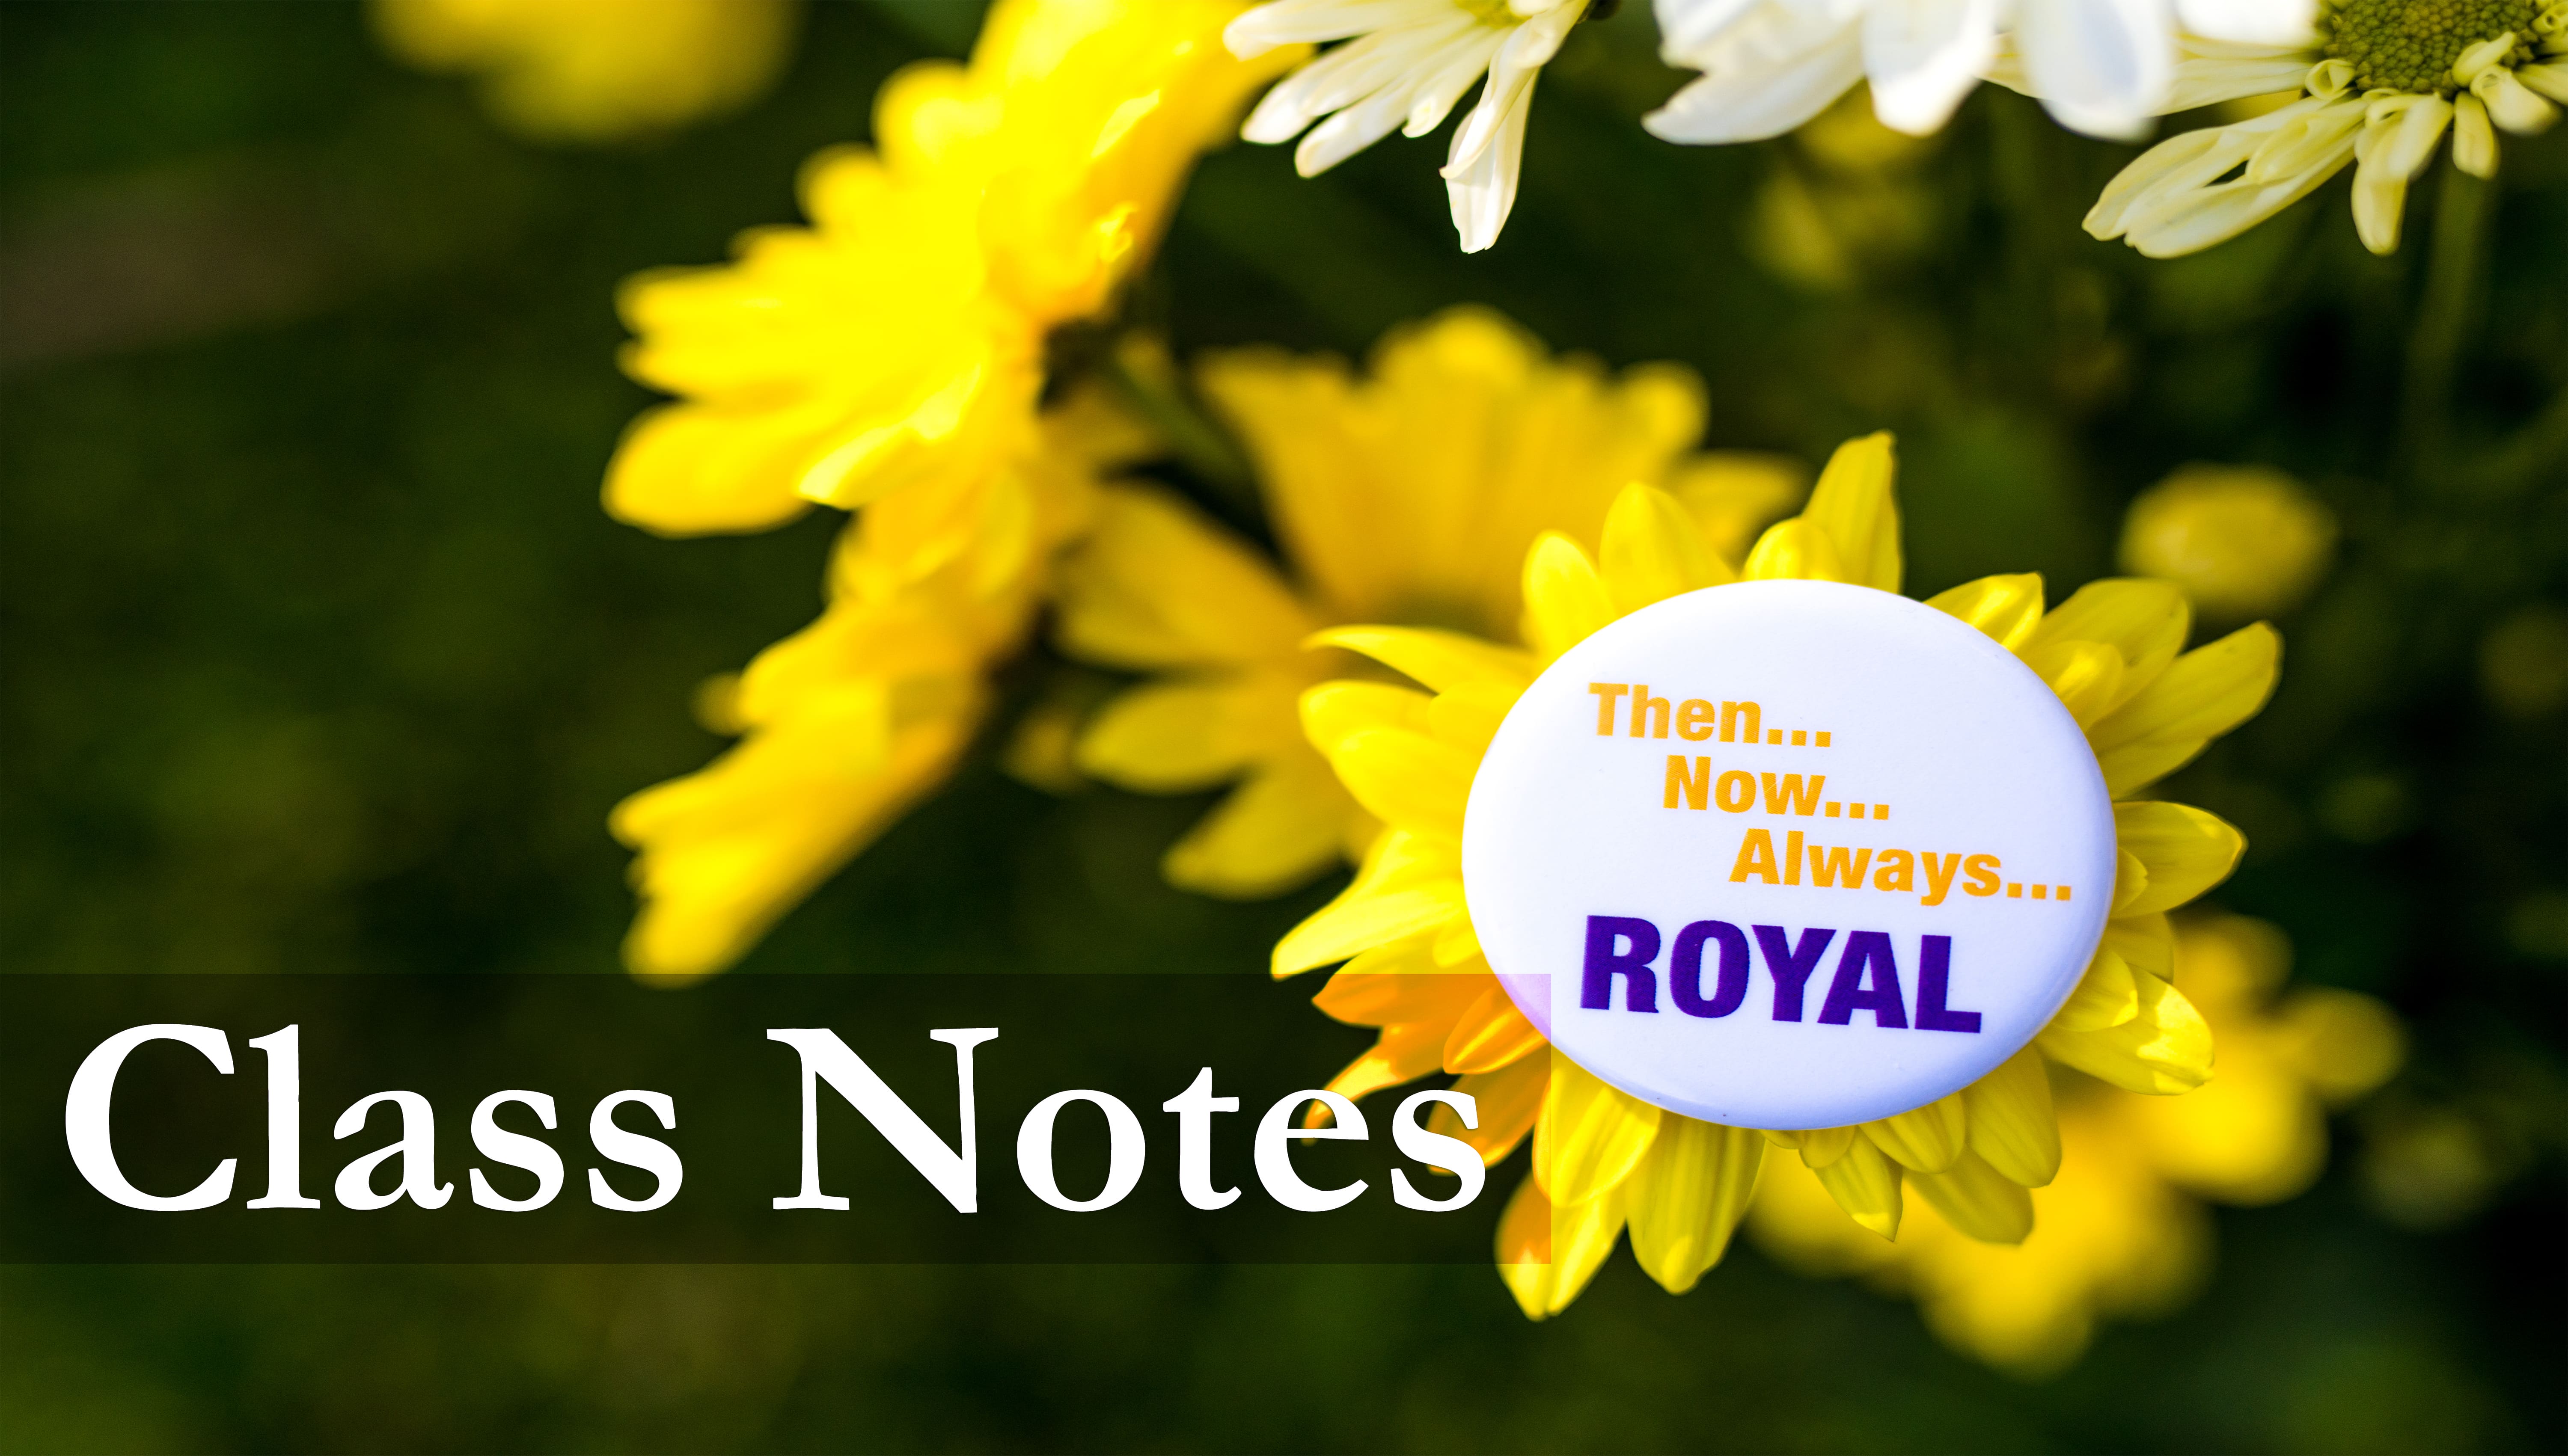 Alumni Class Notes, April 2018 image